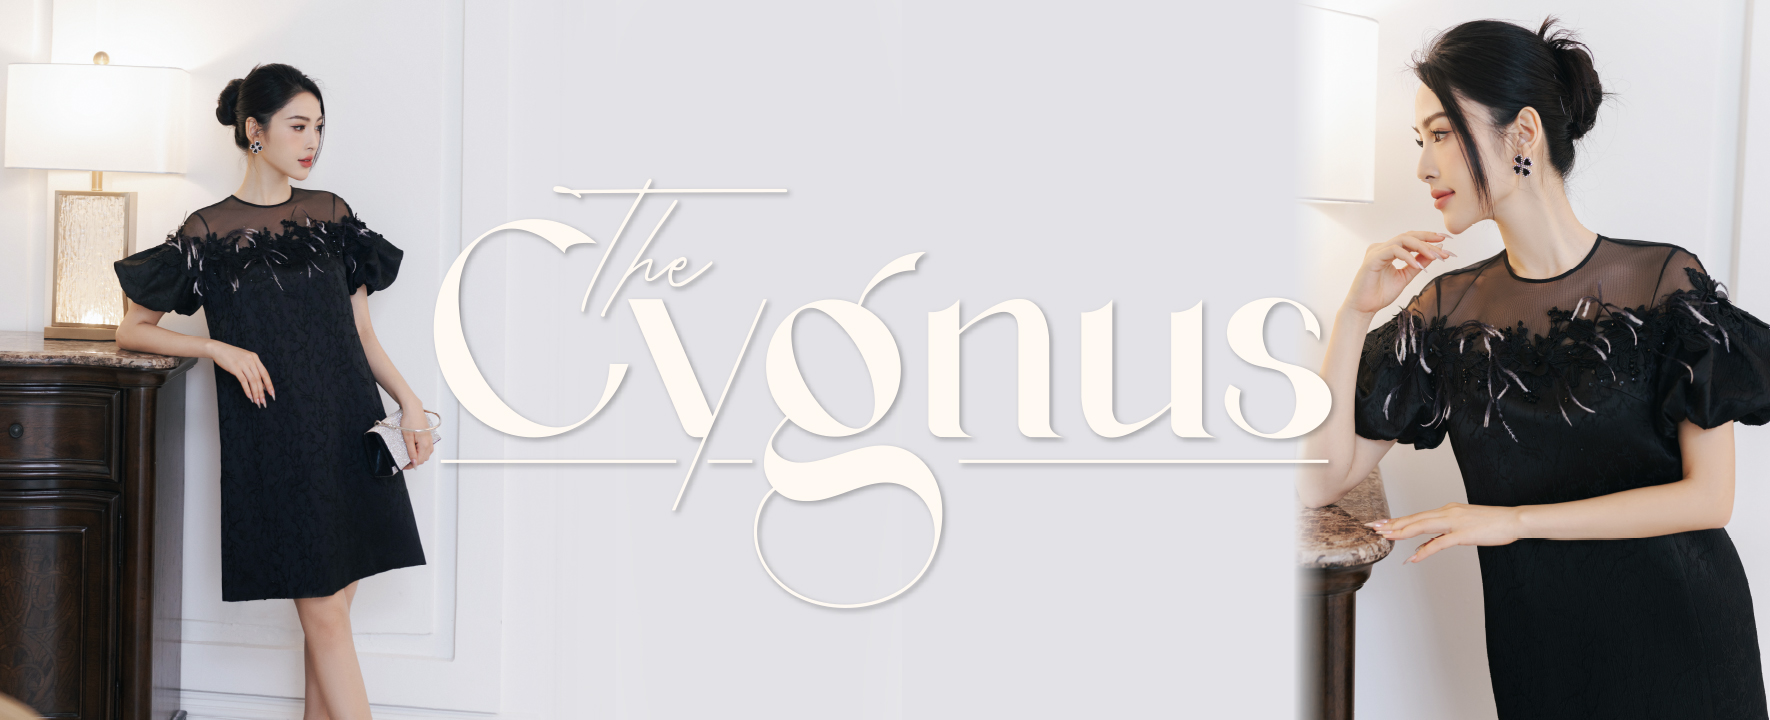 THE CYGNUS